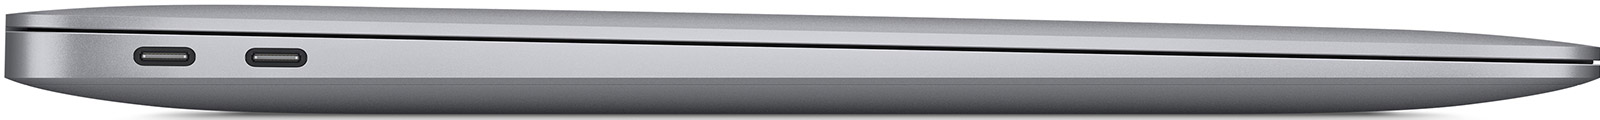 Apple-MacBook-Air-13-3-M1-8-Core-8-GB-256-GB-7-Core-Grafik-Space-Grau-DE-Deut-05.jpg